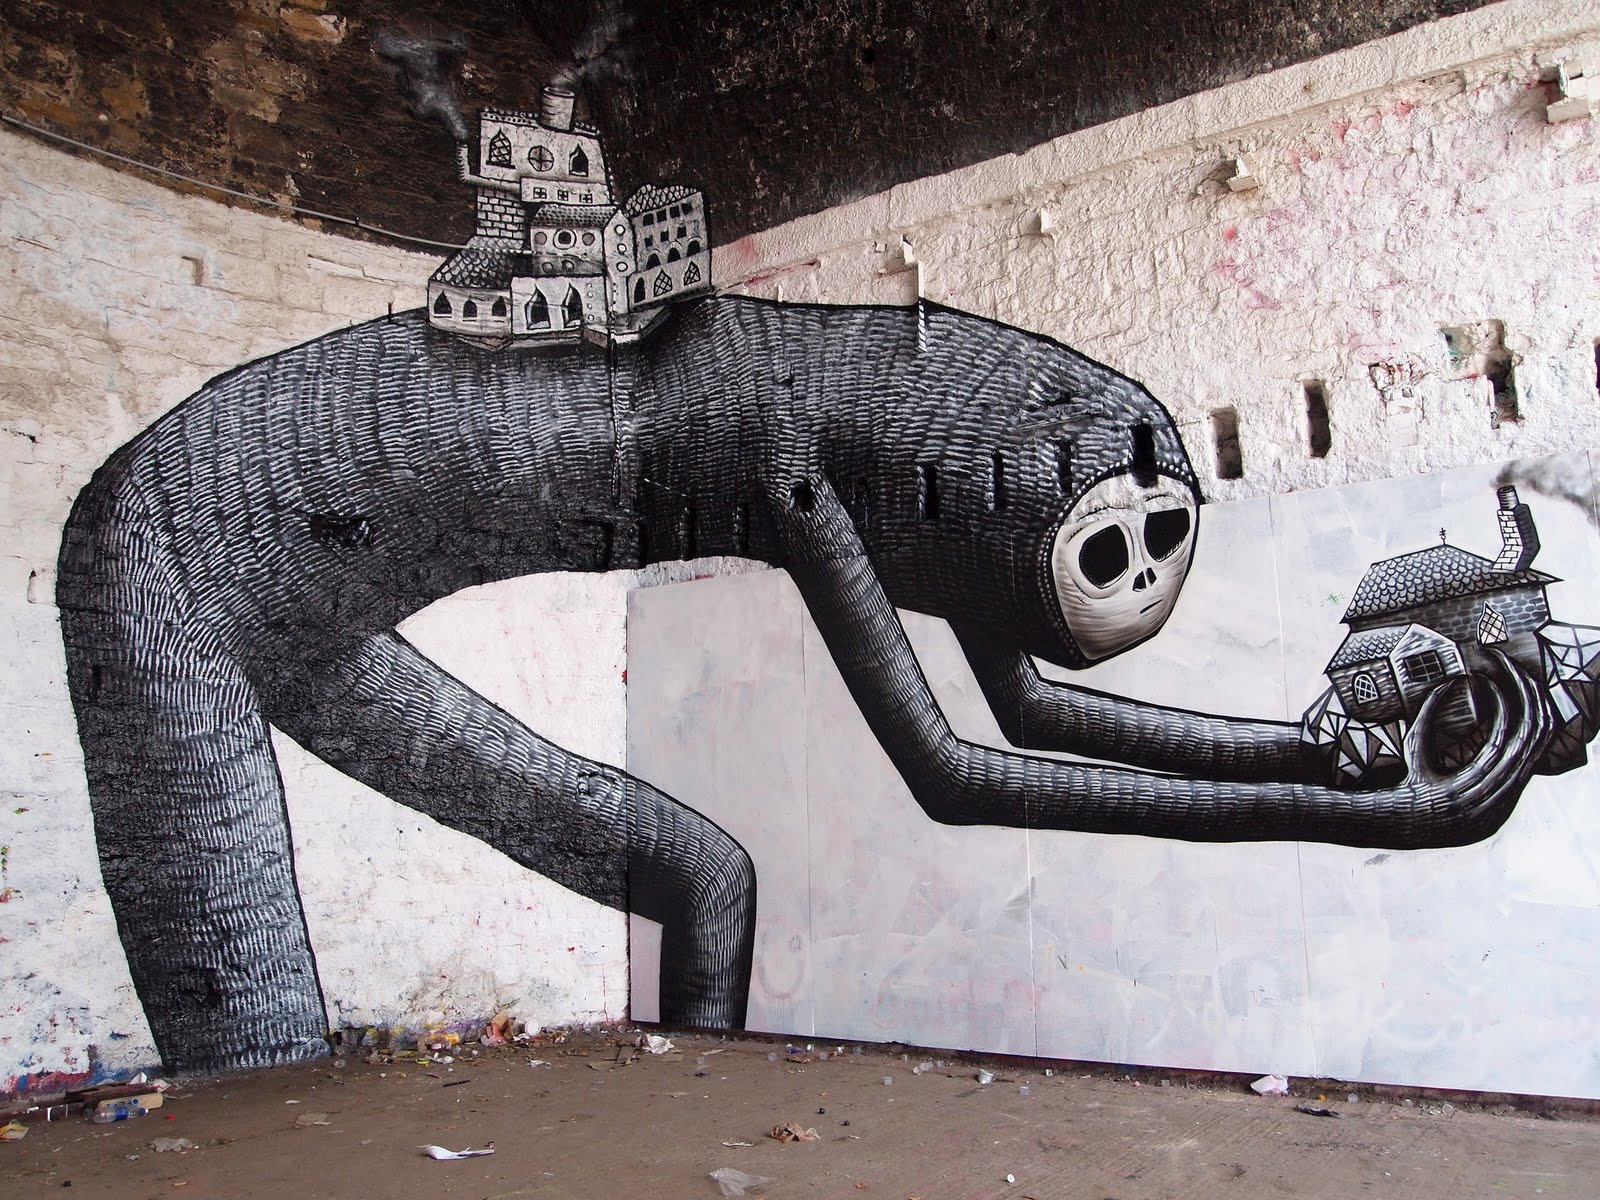 artistic, graffiti, creature, creepy, psychedelic, trippy, urban art, urban